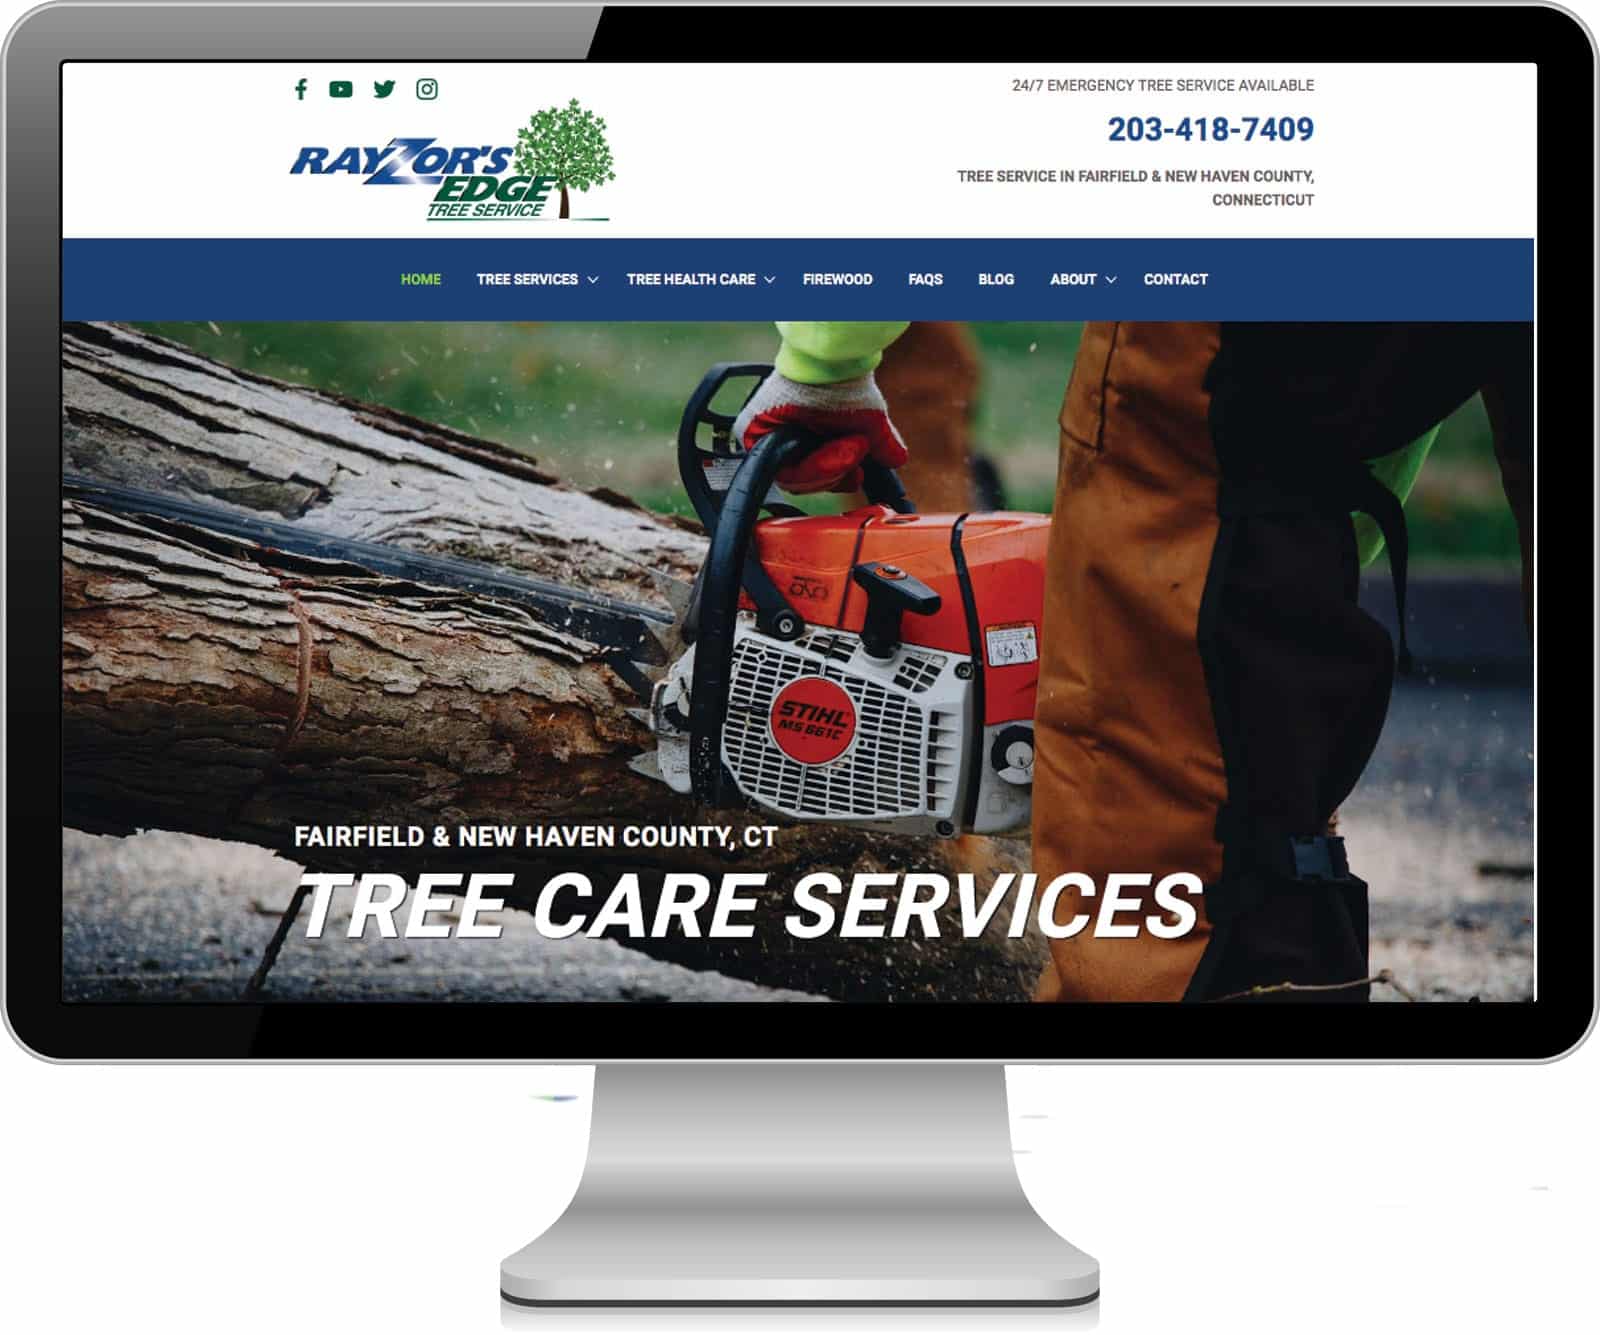 Rayzor's Edge Tree Service website